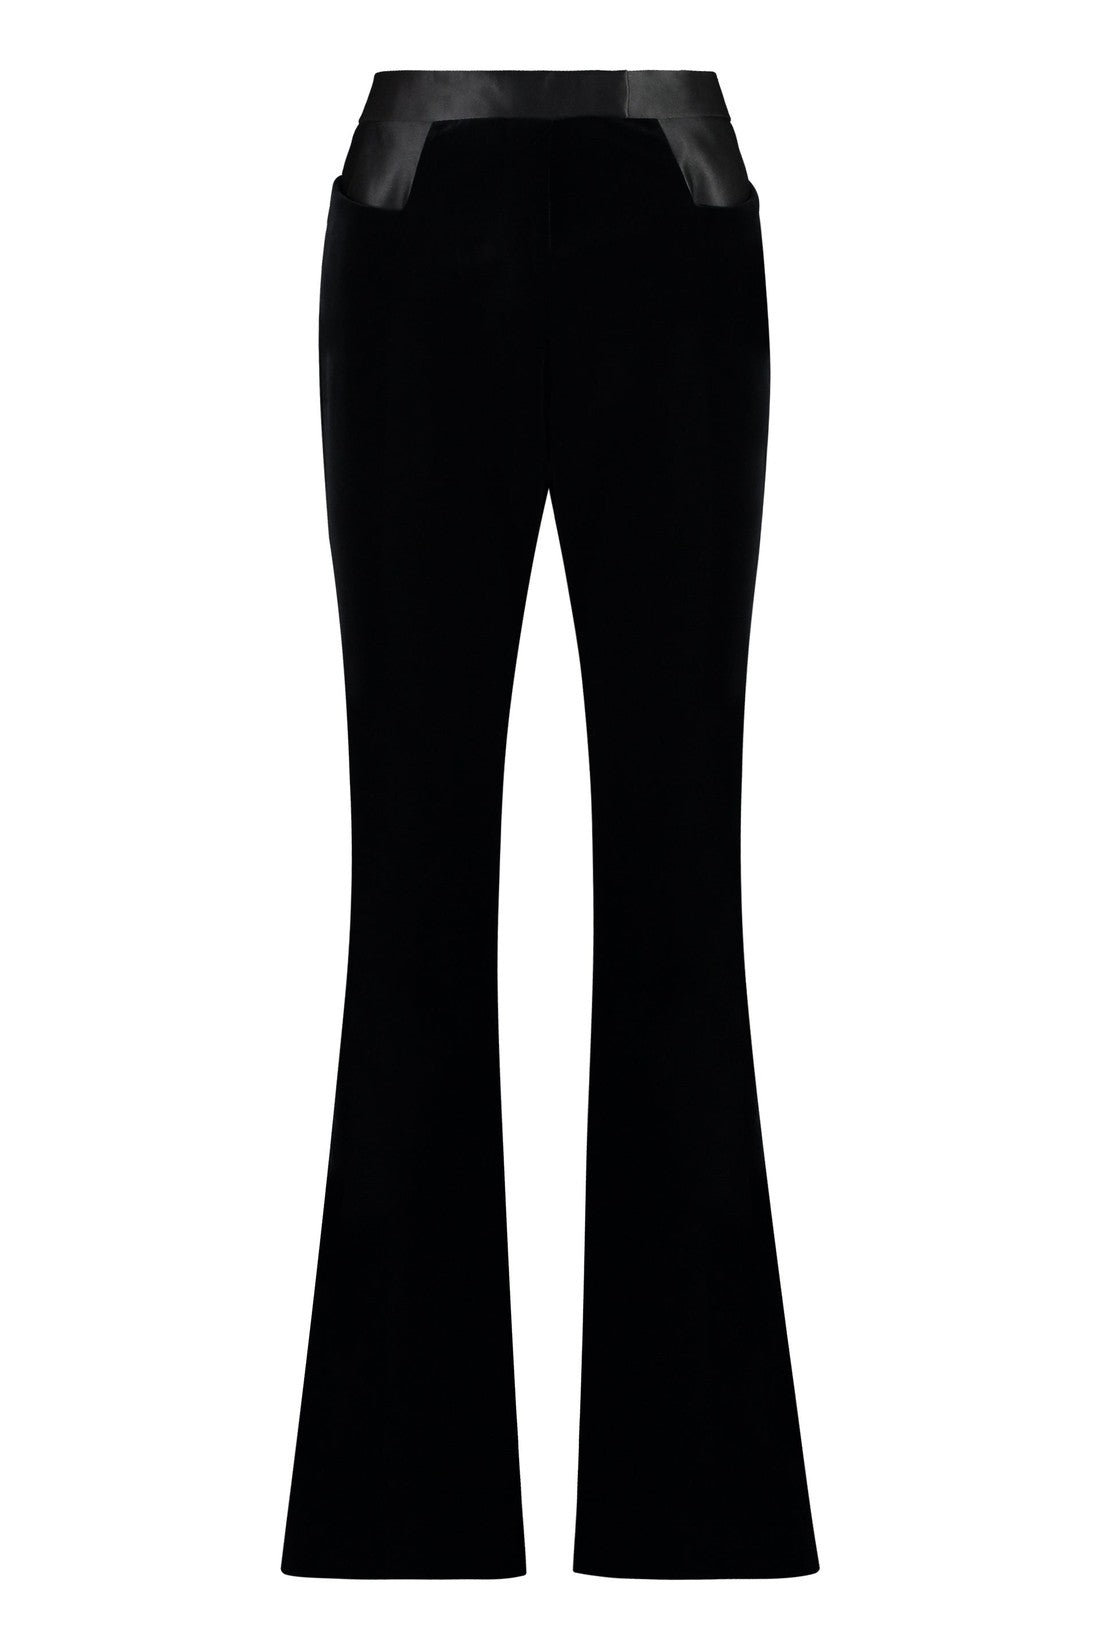 Tom Ford-OUTLET-SALE-velvet trousers-ARCHIVIST